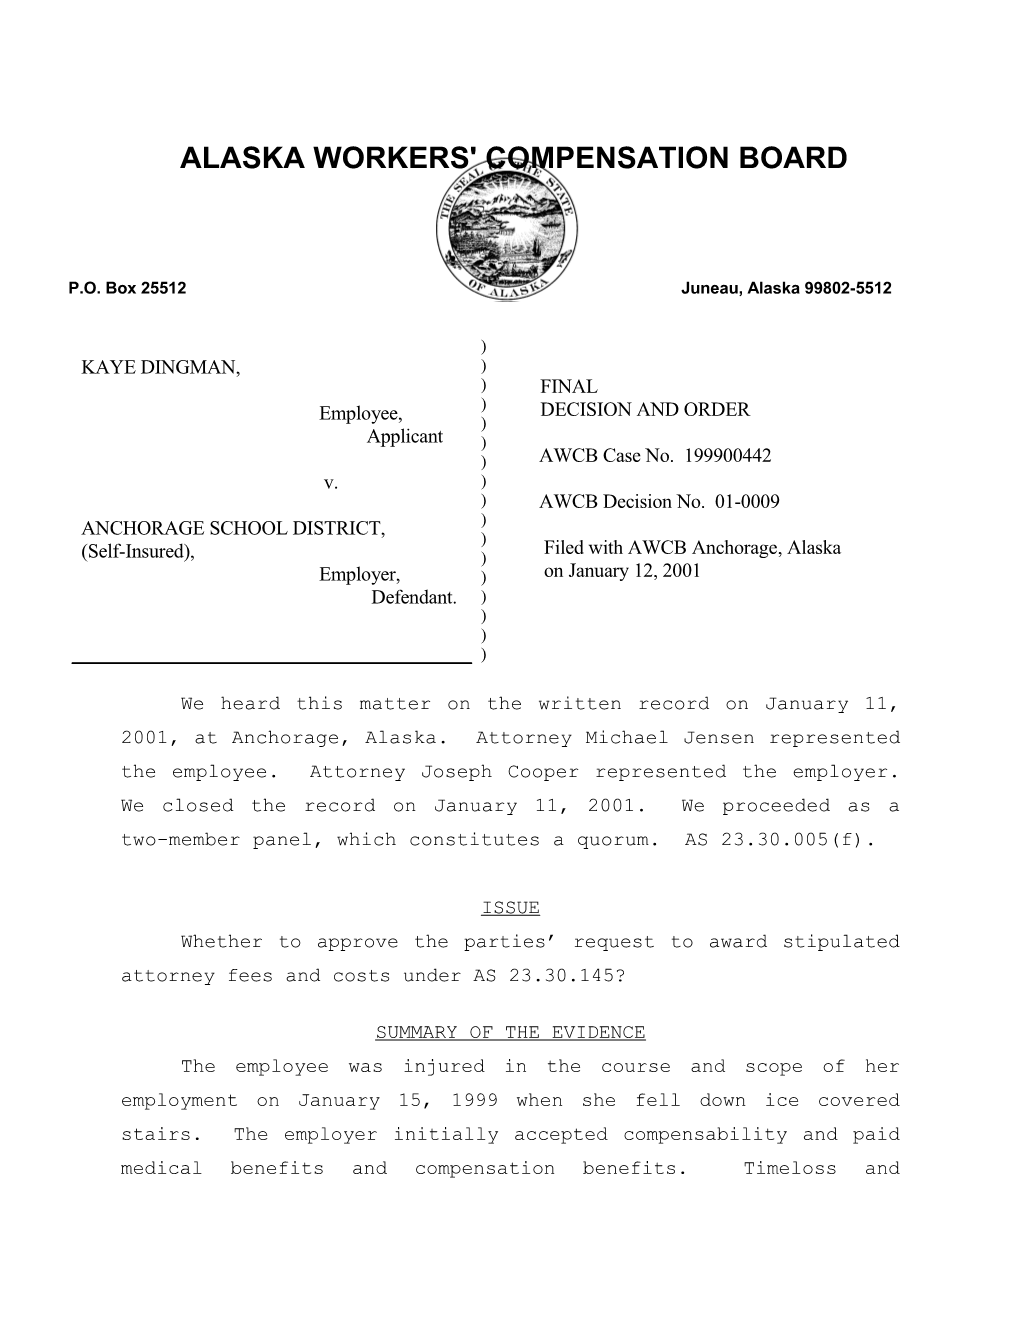 Alaska Workers' Compensation Board s29